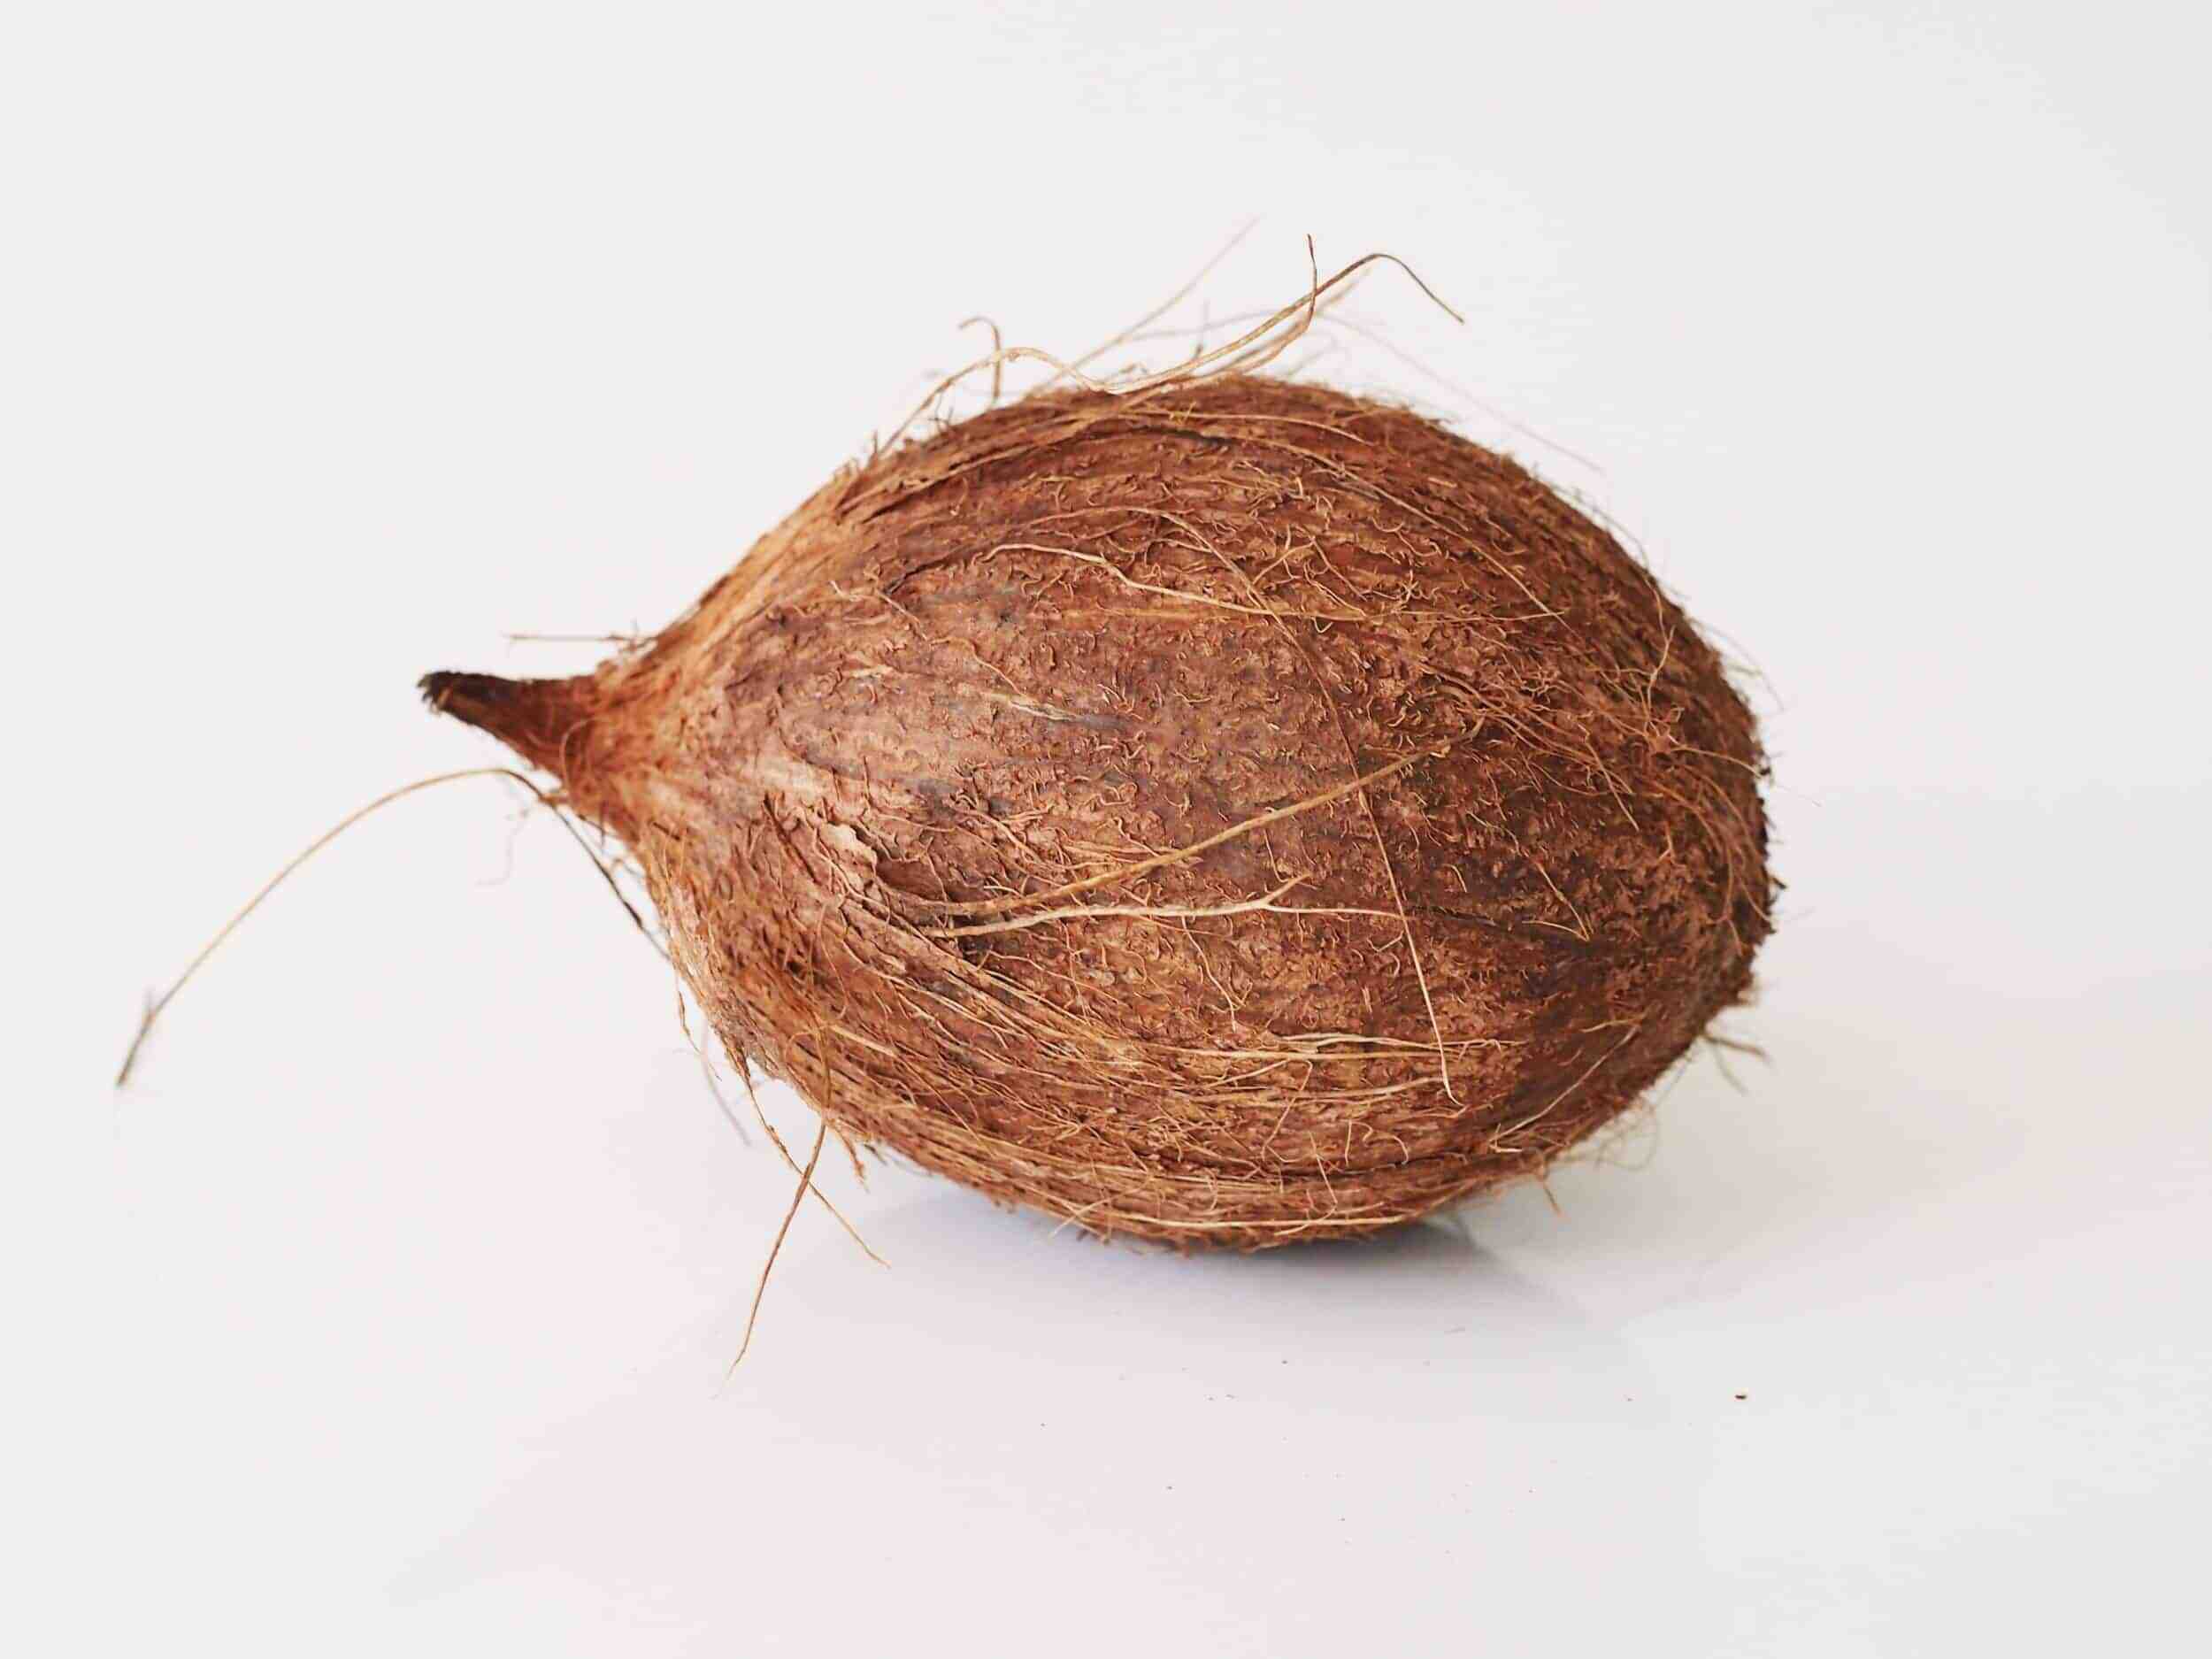 Do coconuts give live birth?